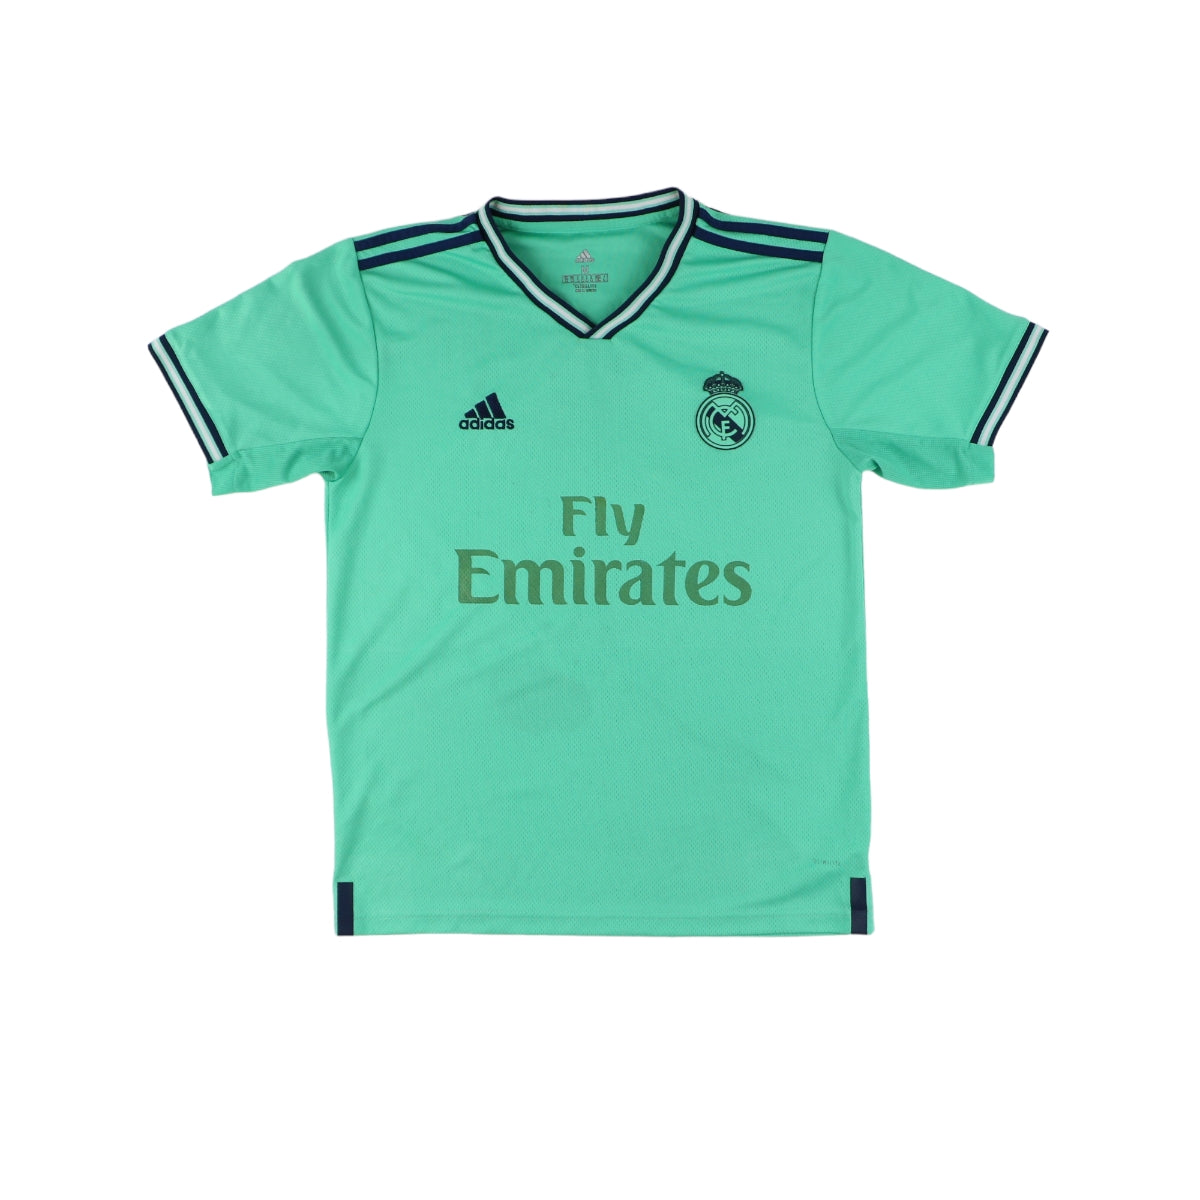 Adidas Football Shirt (M)